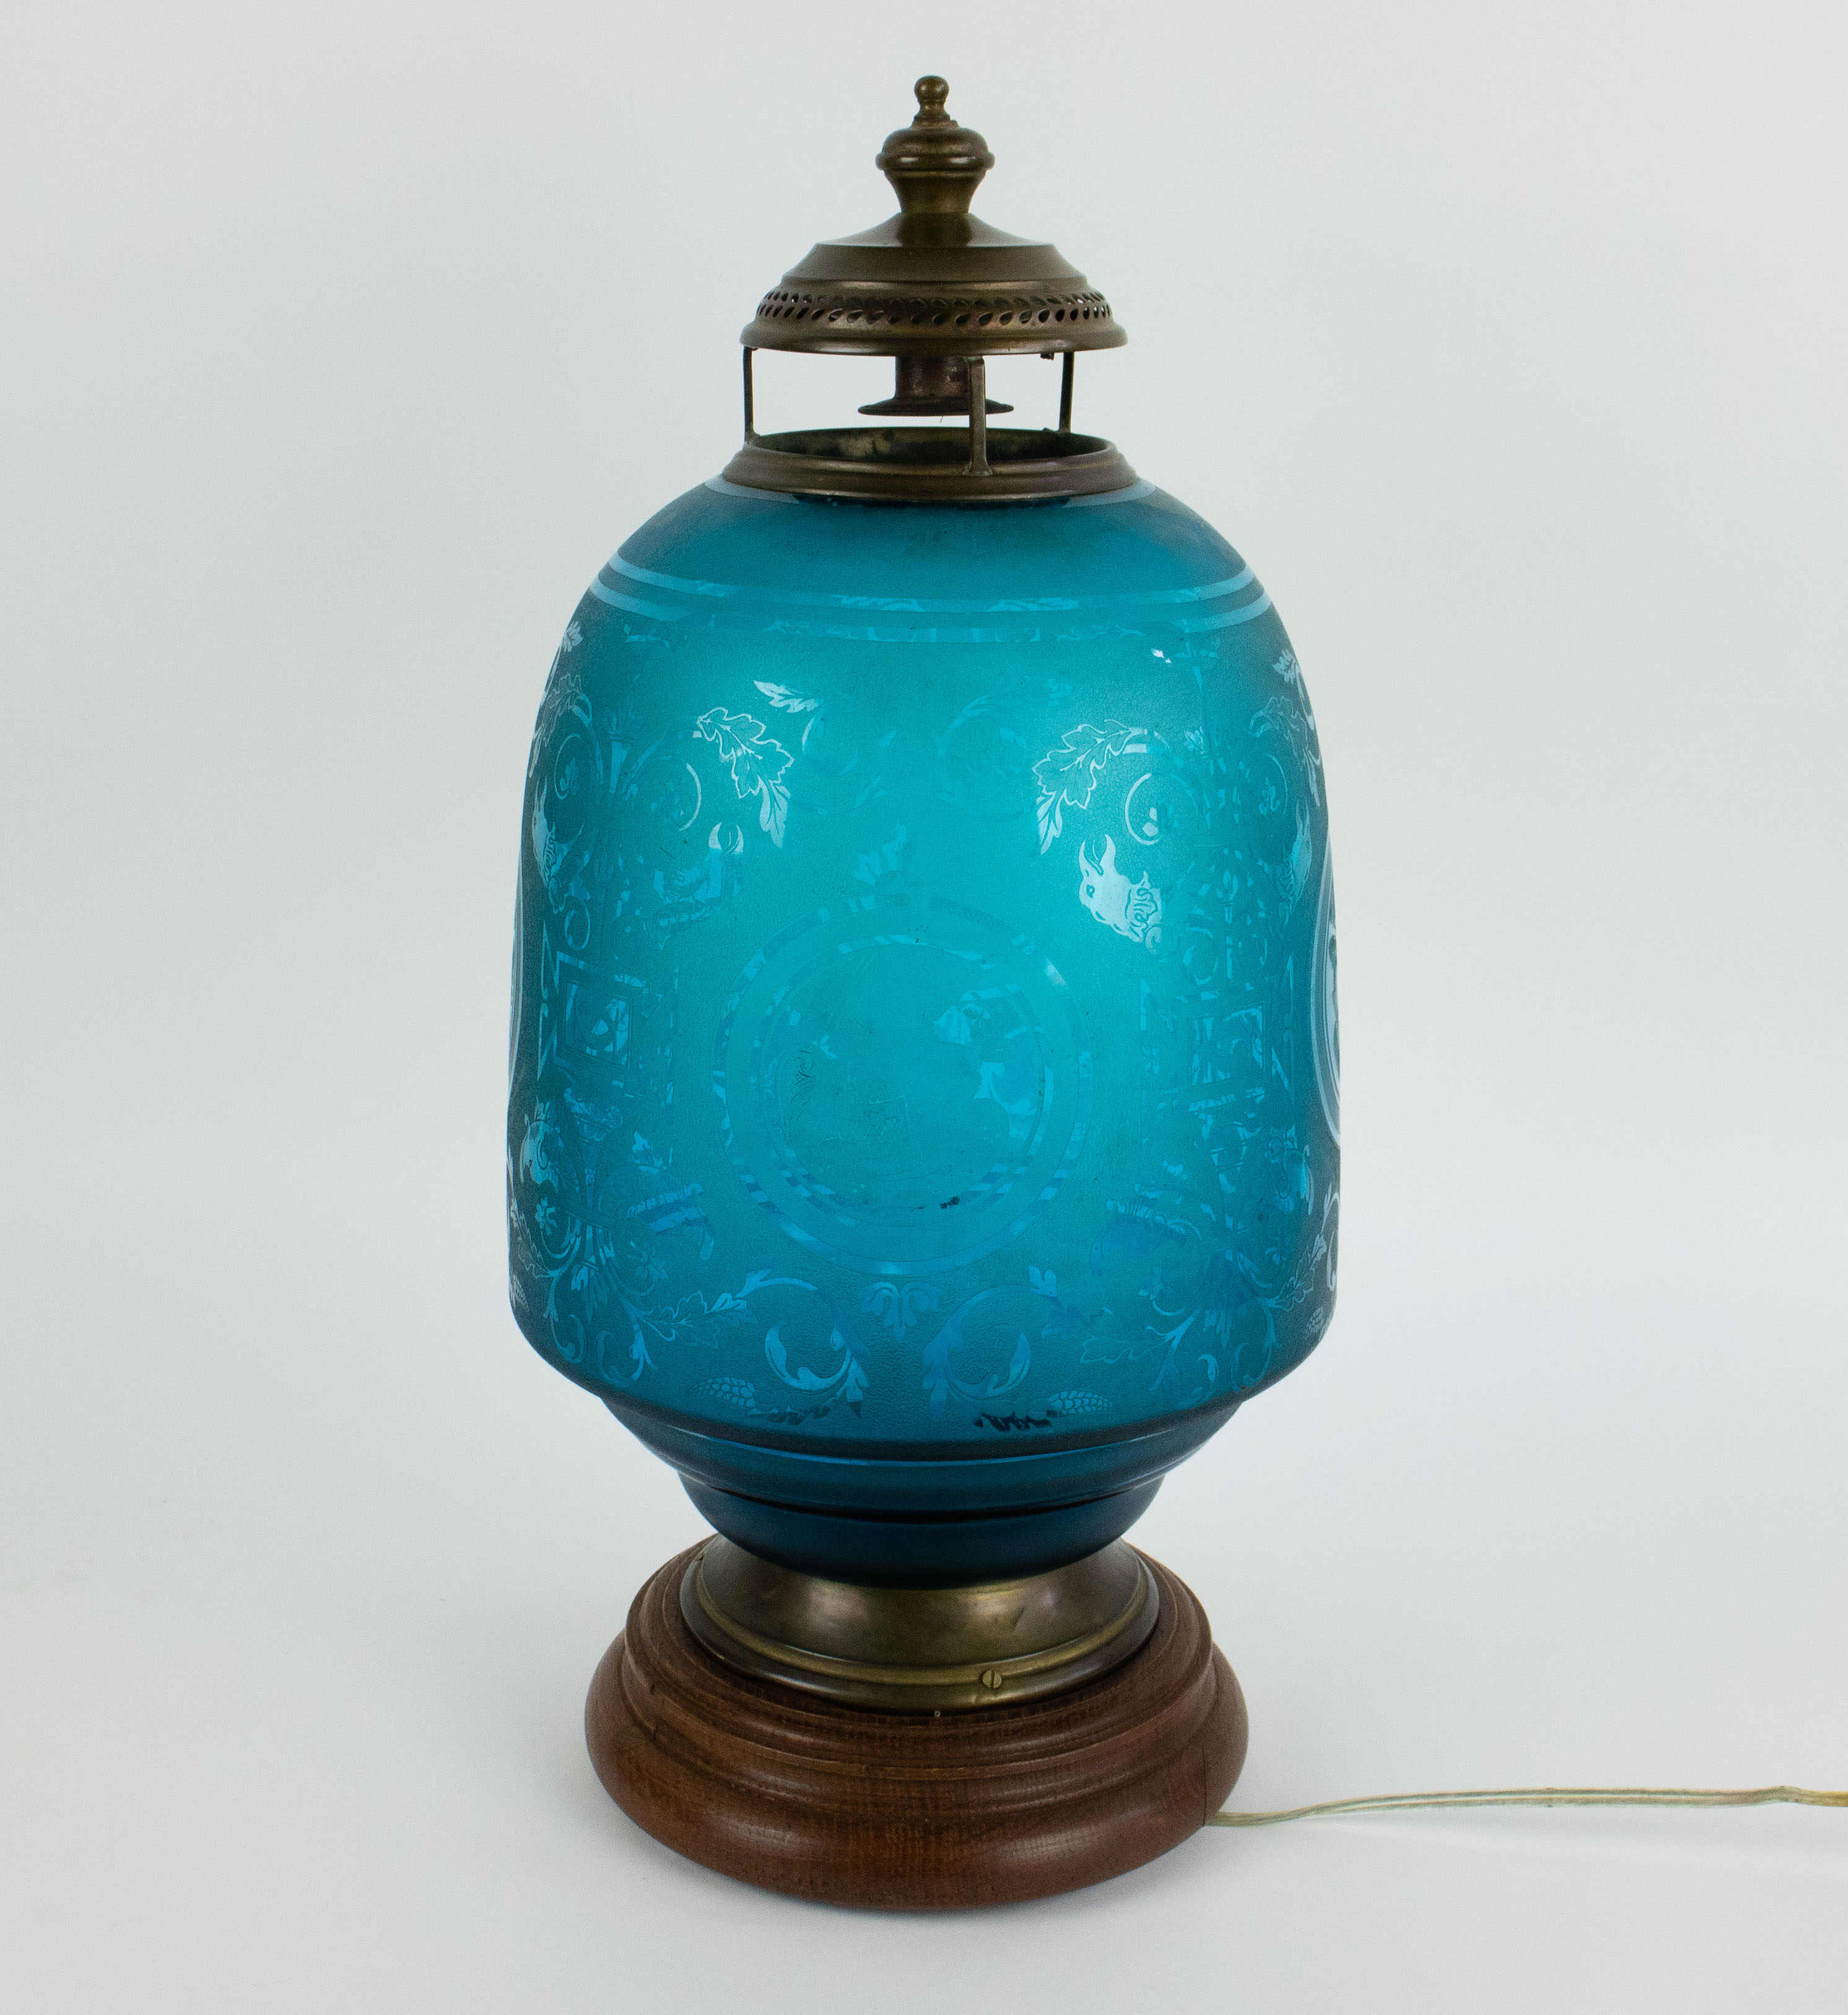 Engraved blue glass lantern Baccarat - Image 3 of 3